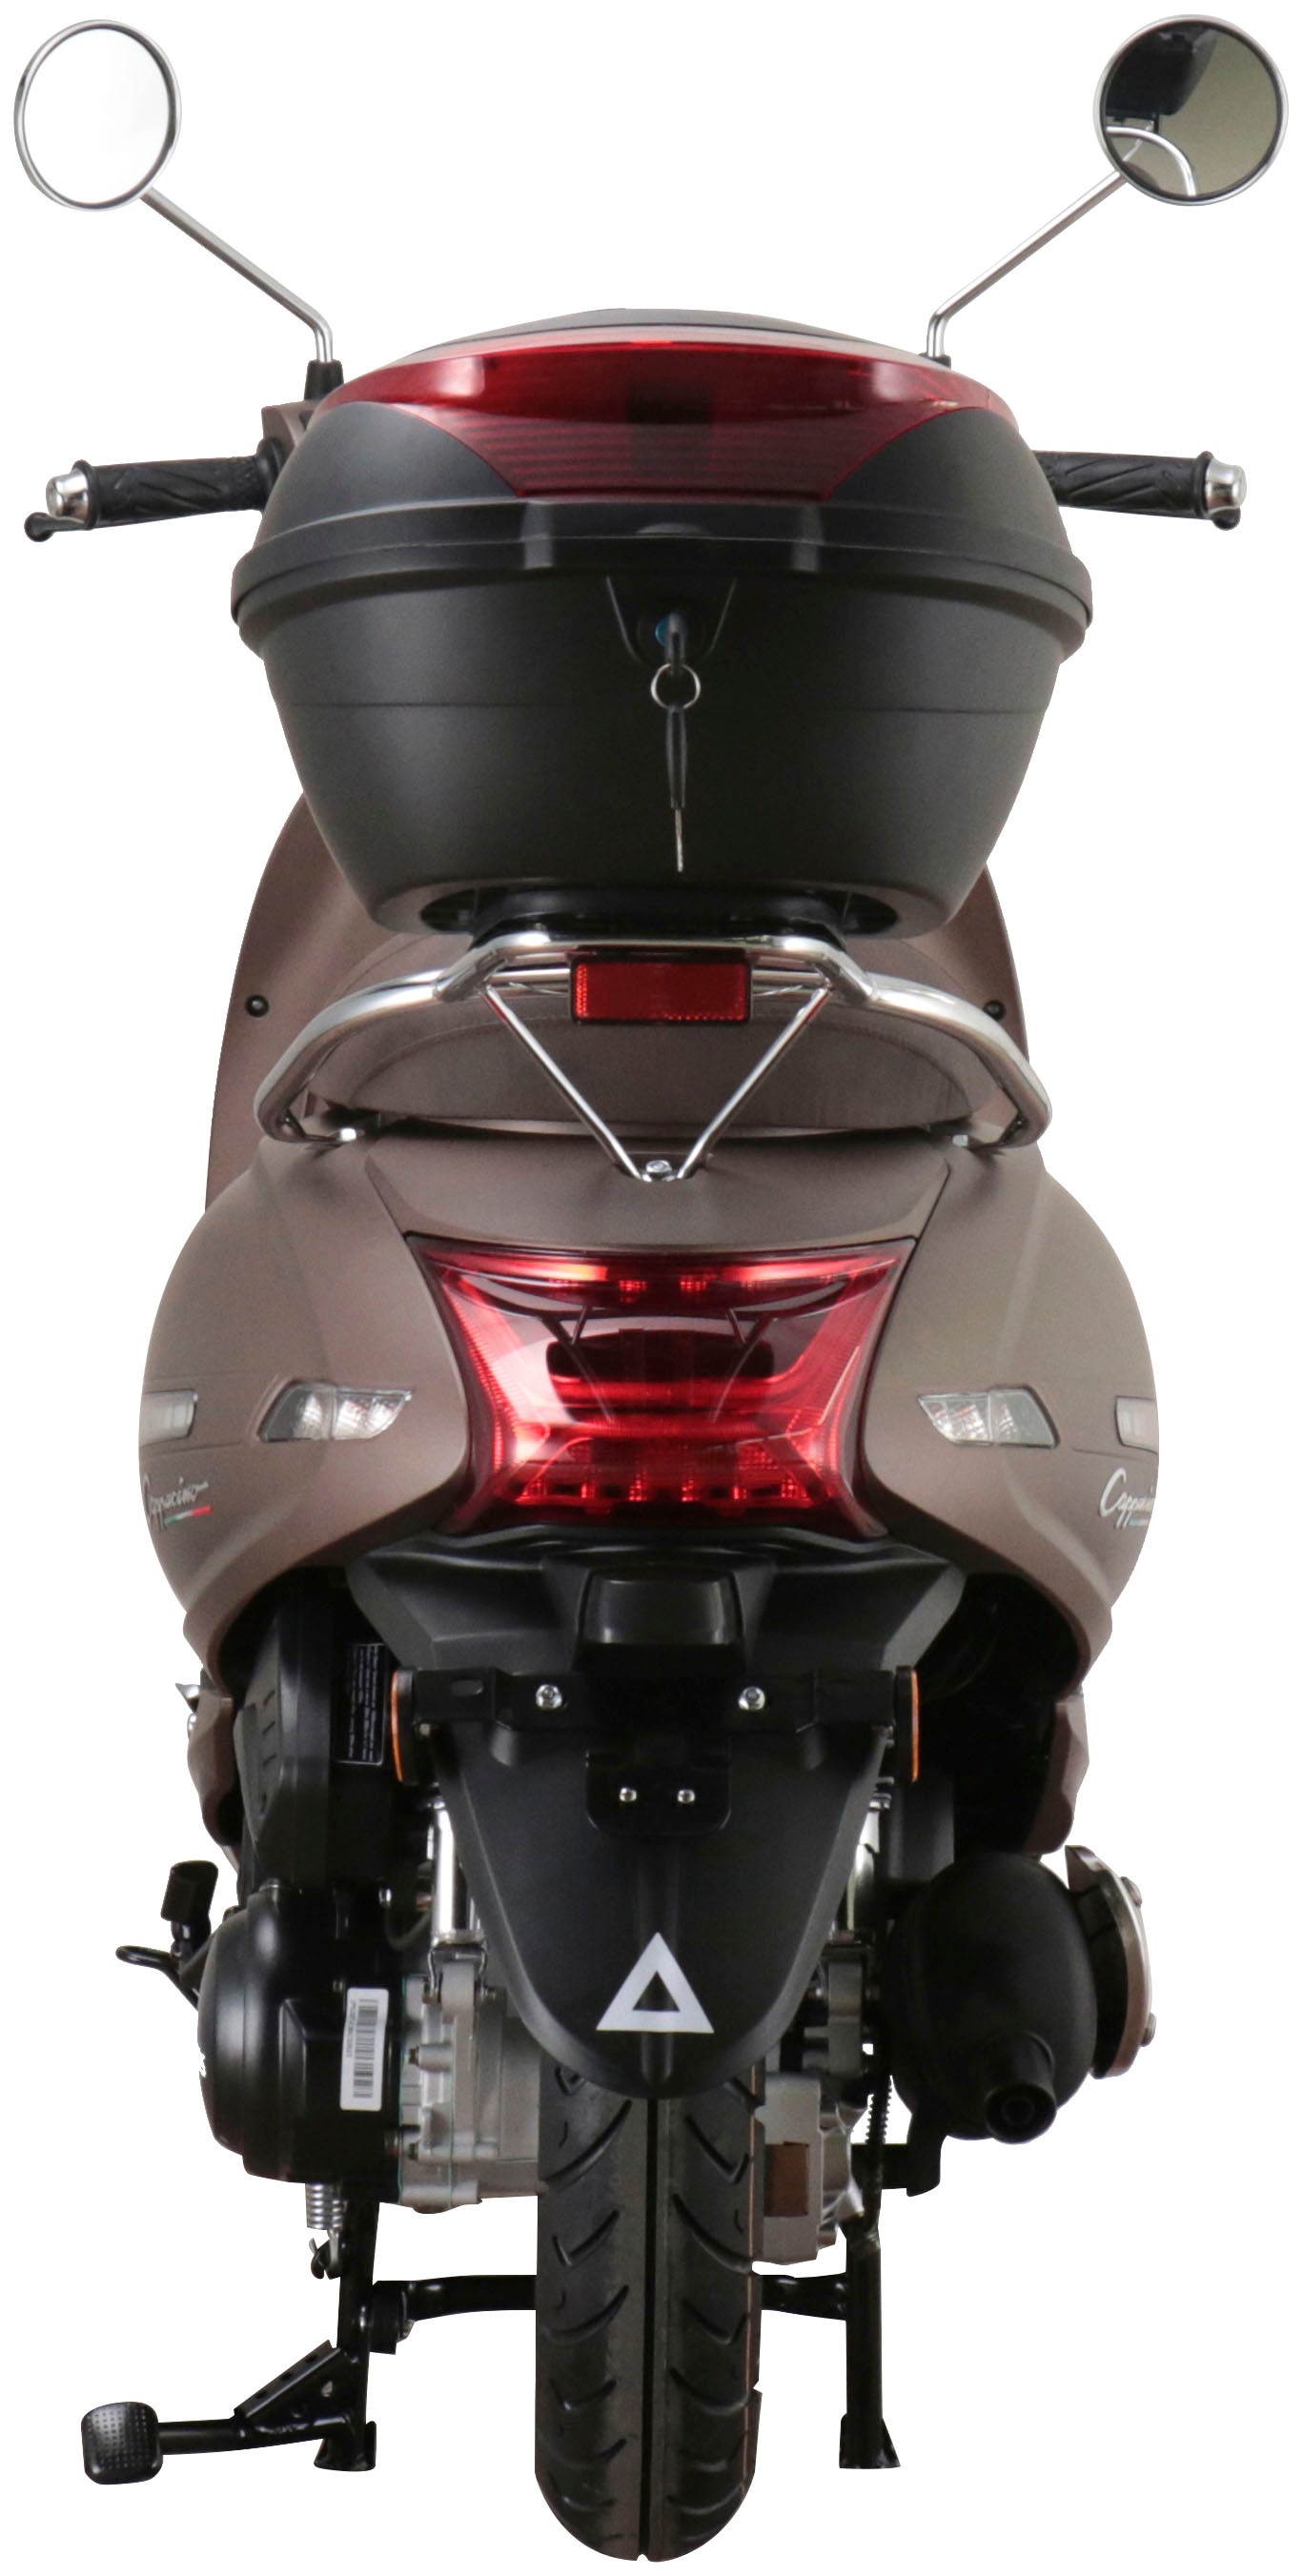 Alpha Motors Motorroller »Cappucino«, 50 cm³, 45 km/h, Euro 5, 2,99 PS, inkl. Topcase